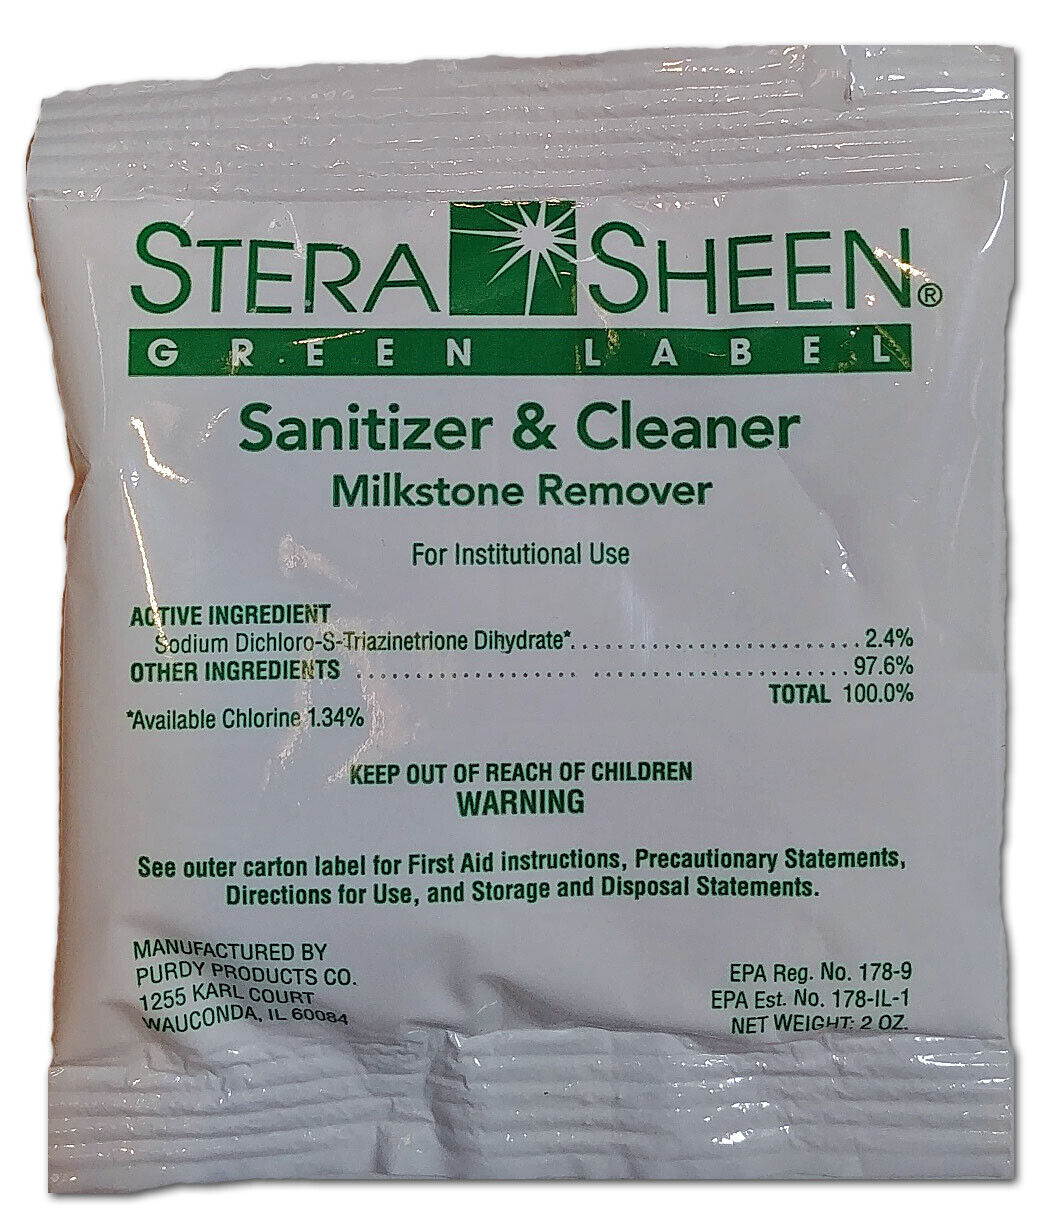 Stera Sheen Green Label Sanitizer Packets